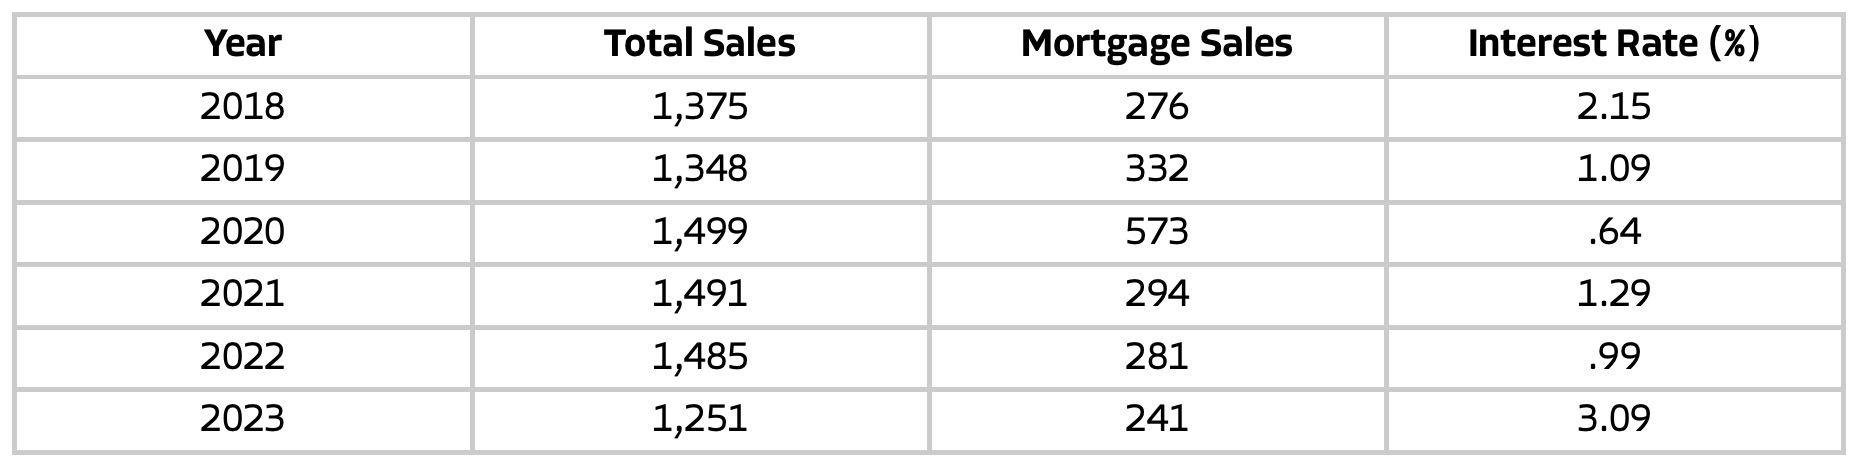 Mortgage sales in Turkey